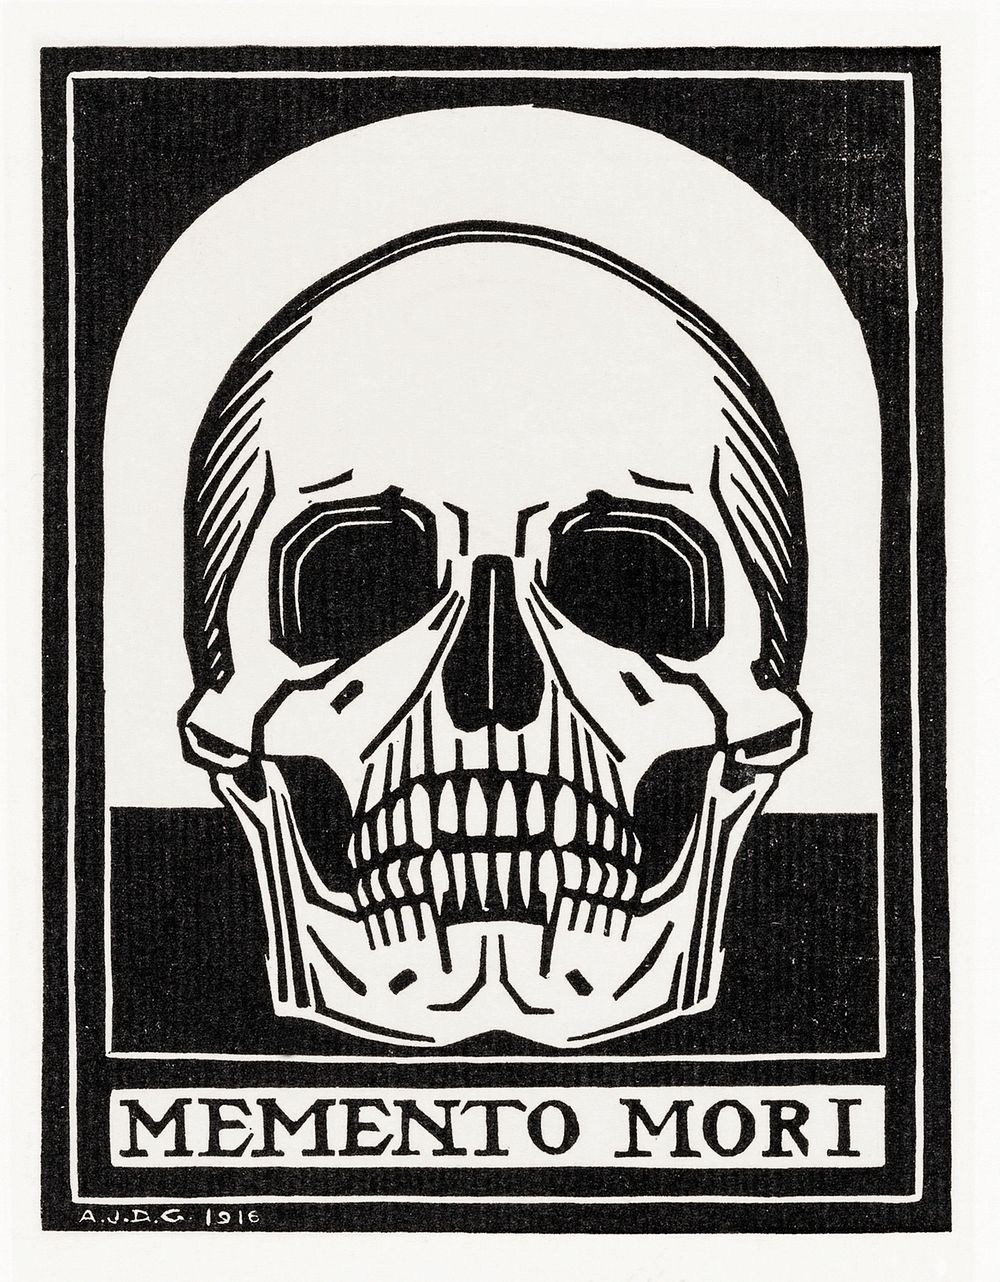 Memento mori (1916) by Julie de Graag (1877-1924). Original from The Rijksmuseum. Digitally enhanced by rawpixel.